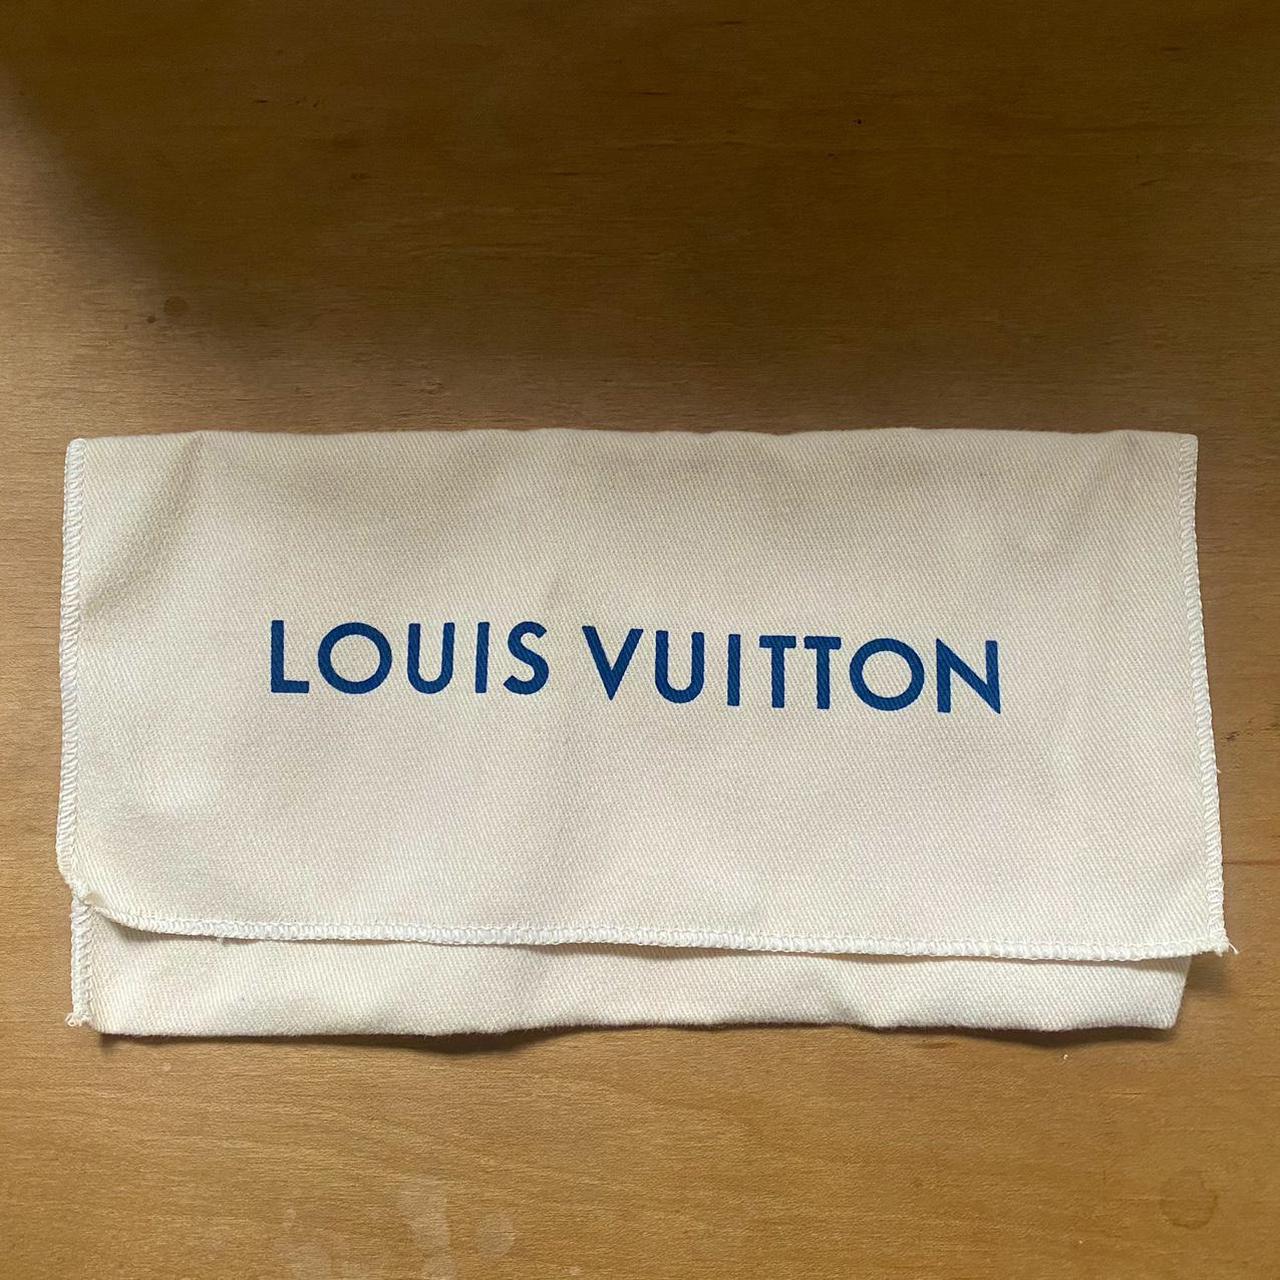 Louis voutton paper shopping 🛍 bag orange logo in black